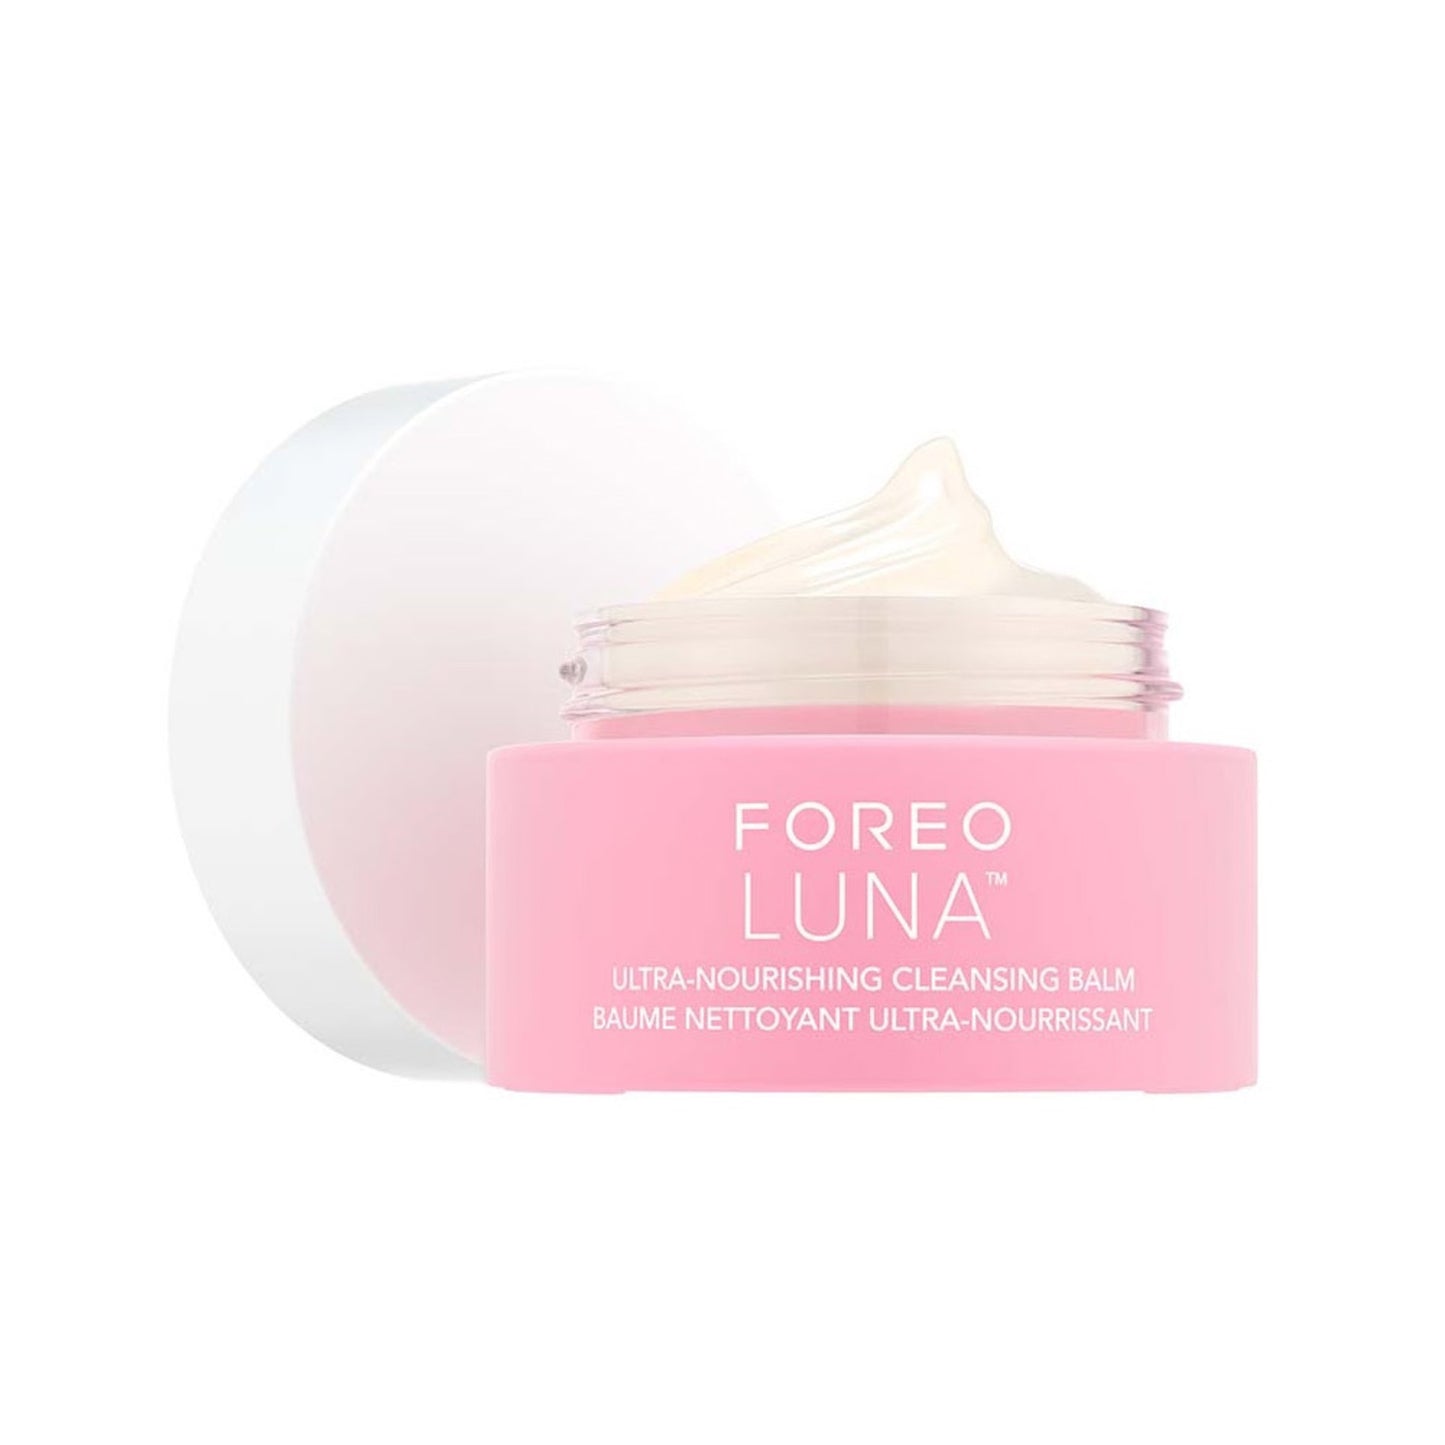 Foreo Luna Ultra-Nourishing Cleansing Balm